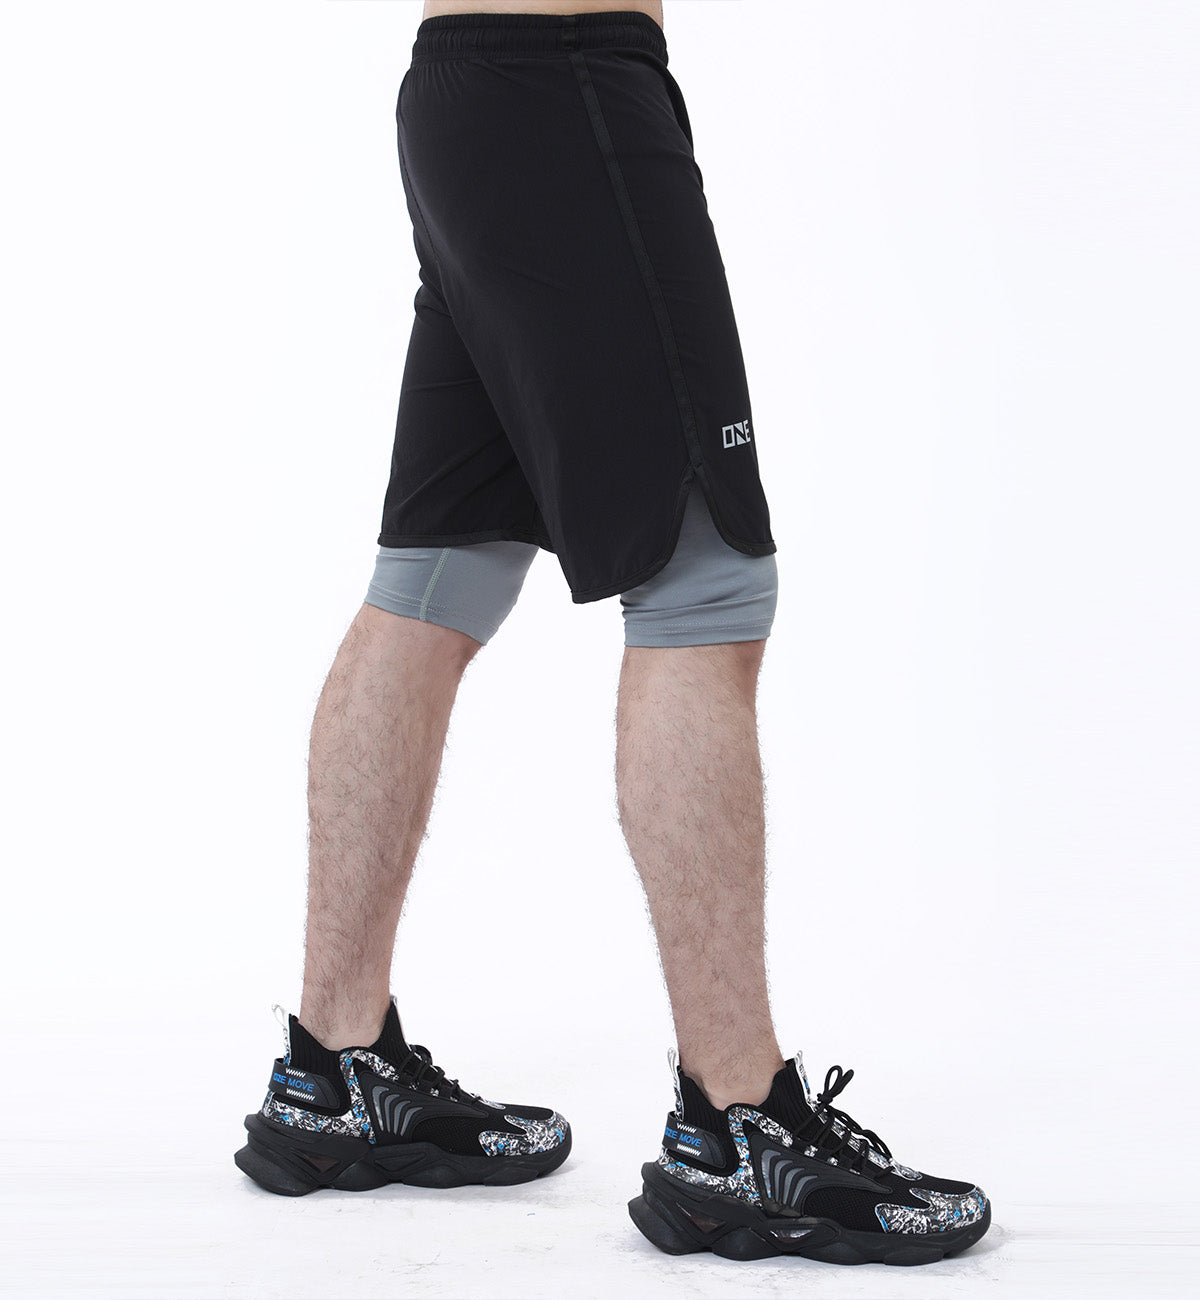 Double Shorts Black/Grey (7606689955991)